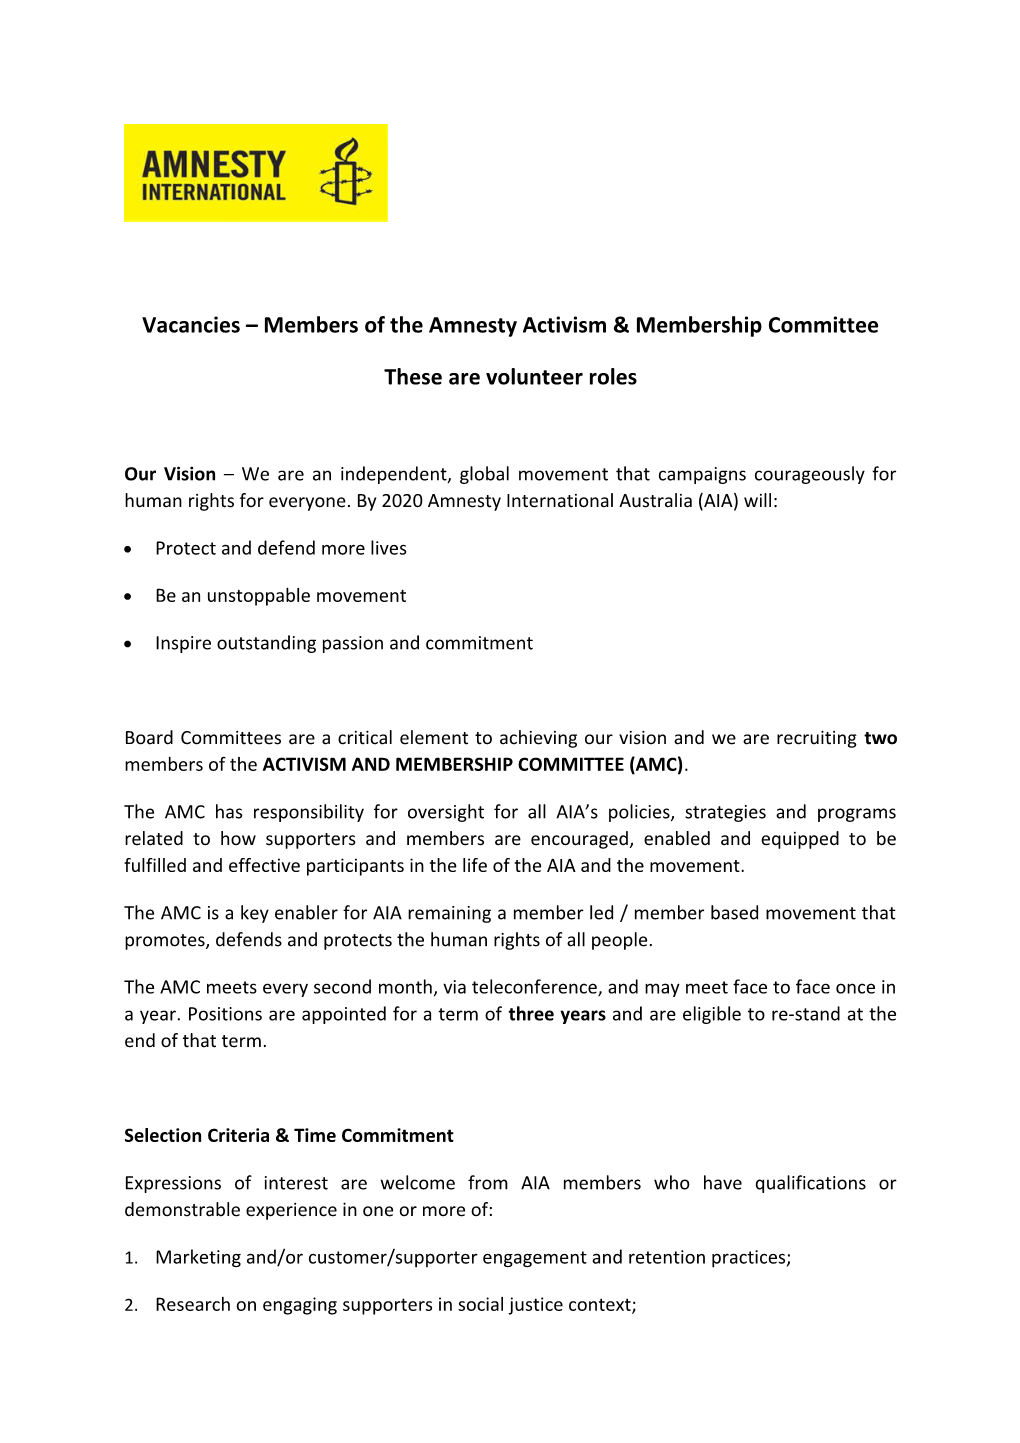 Vacancies Members of the Amnesty Activism & Membership Committee